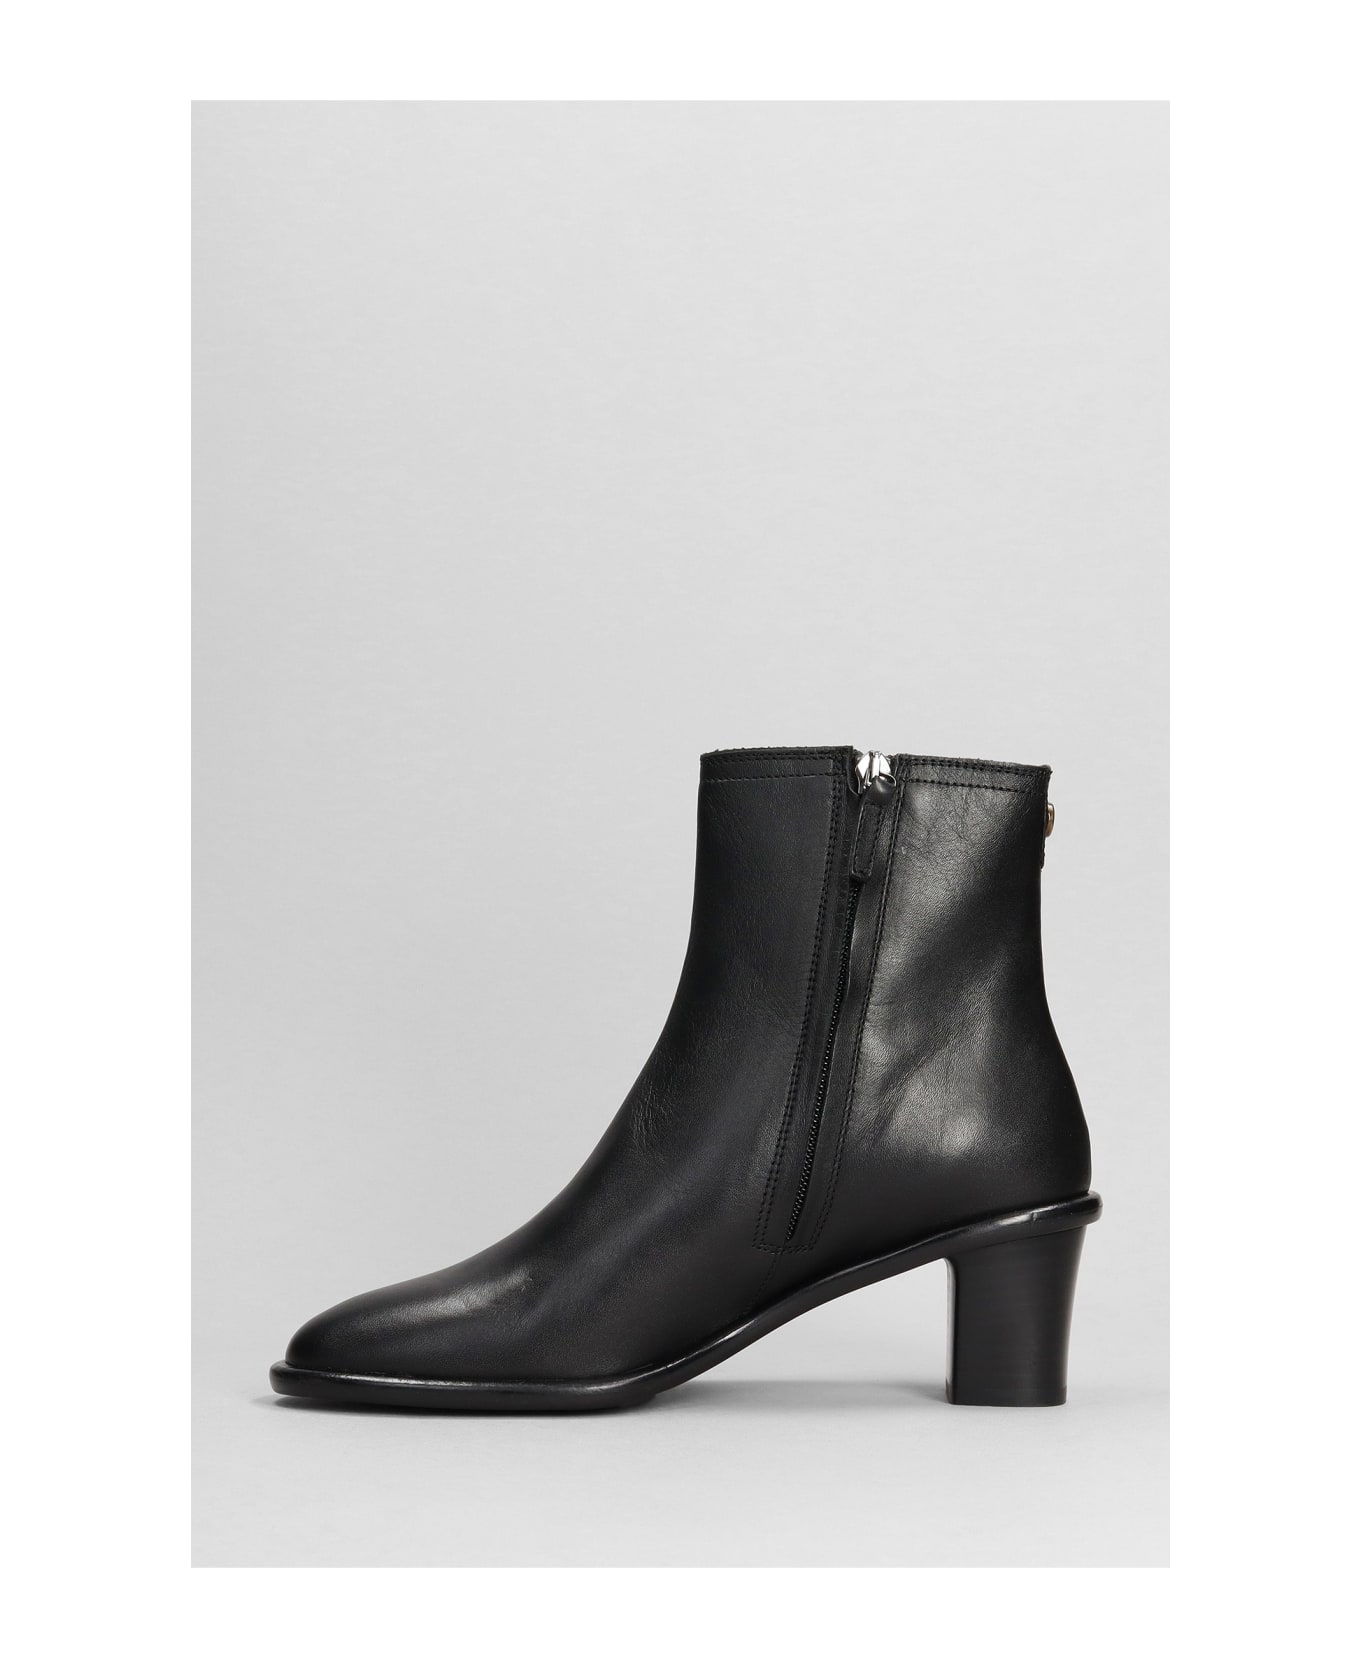 Isabel Marant Gelda Low Heels Ankle Boots In Black Leather - black